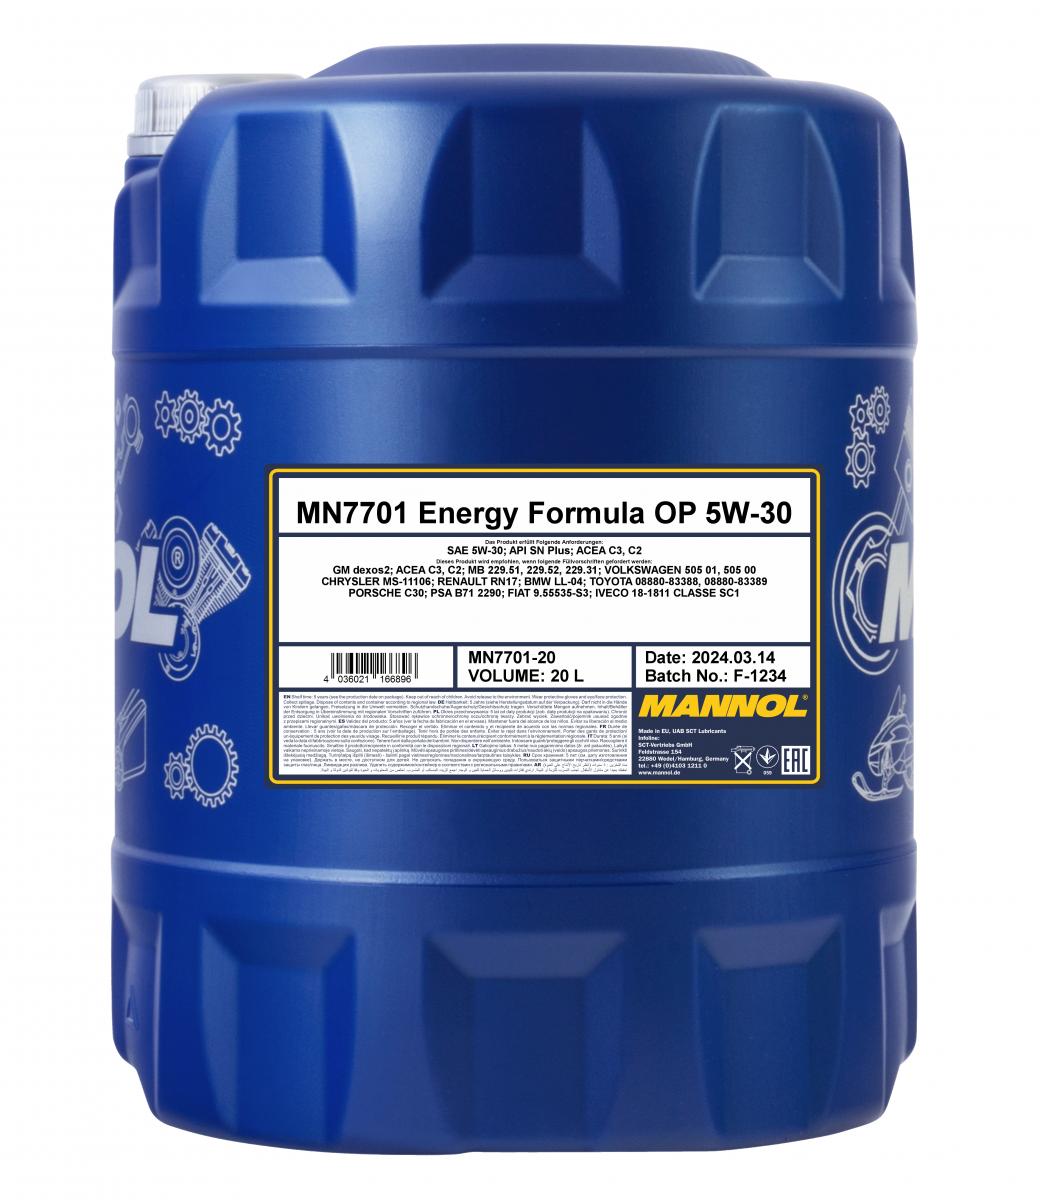 MN7701 Energy Formula OP 5W-30